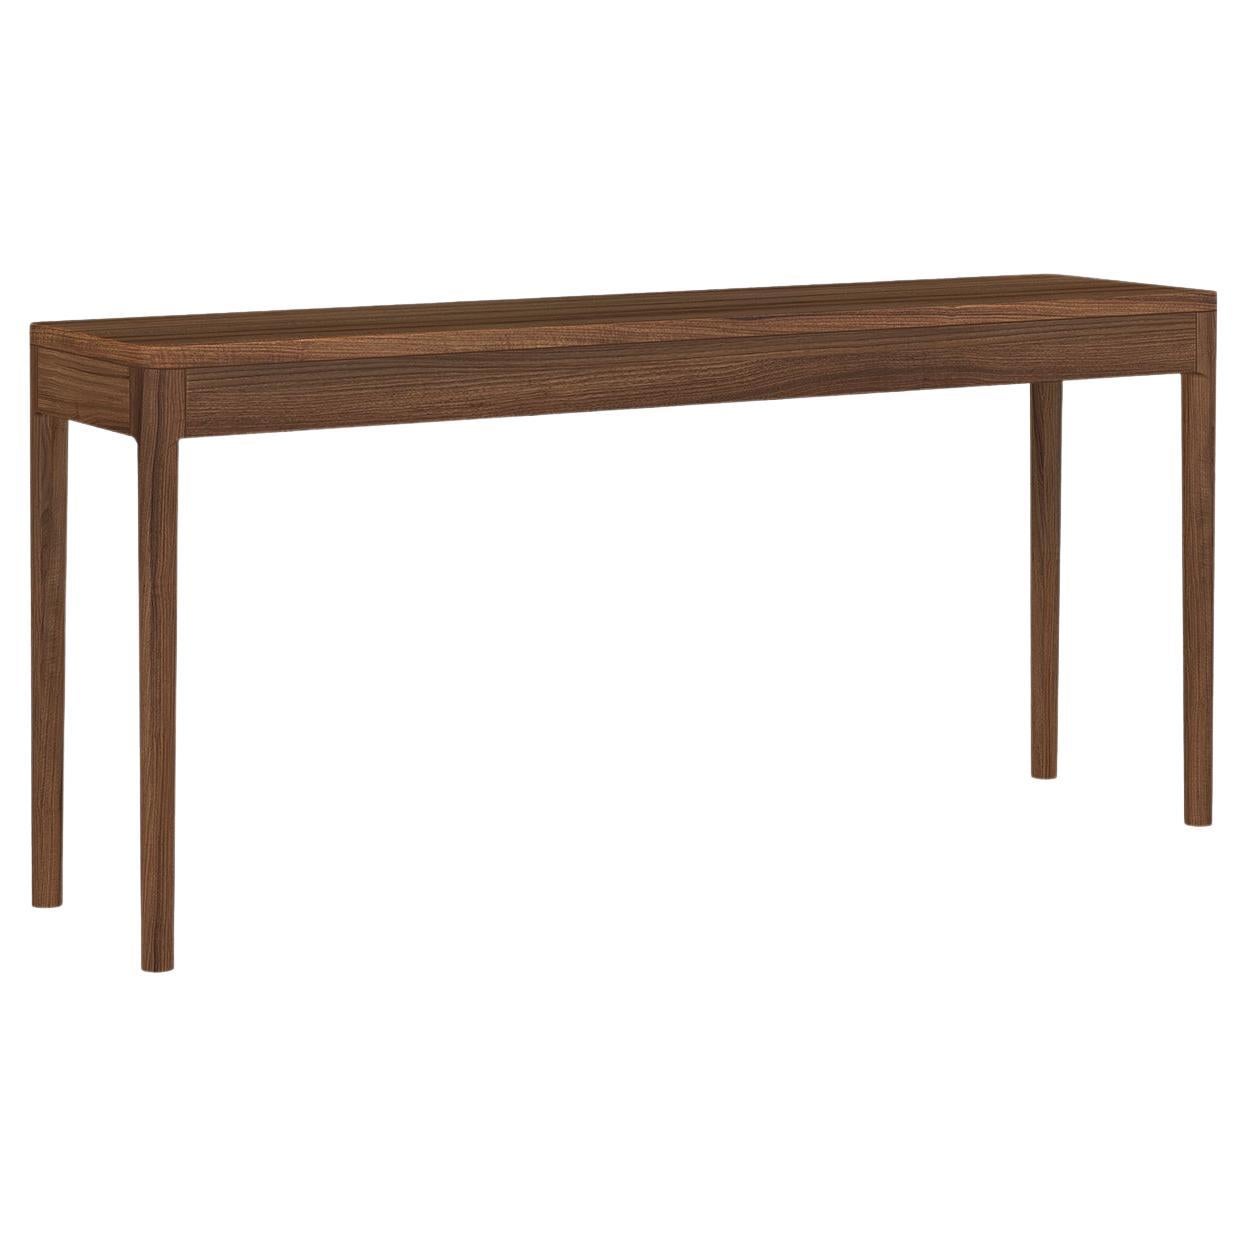 Table console moderne minimaliste en noyer en vente